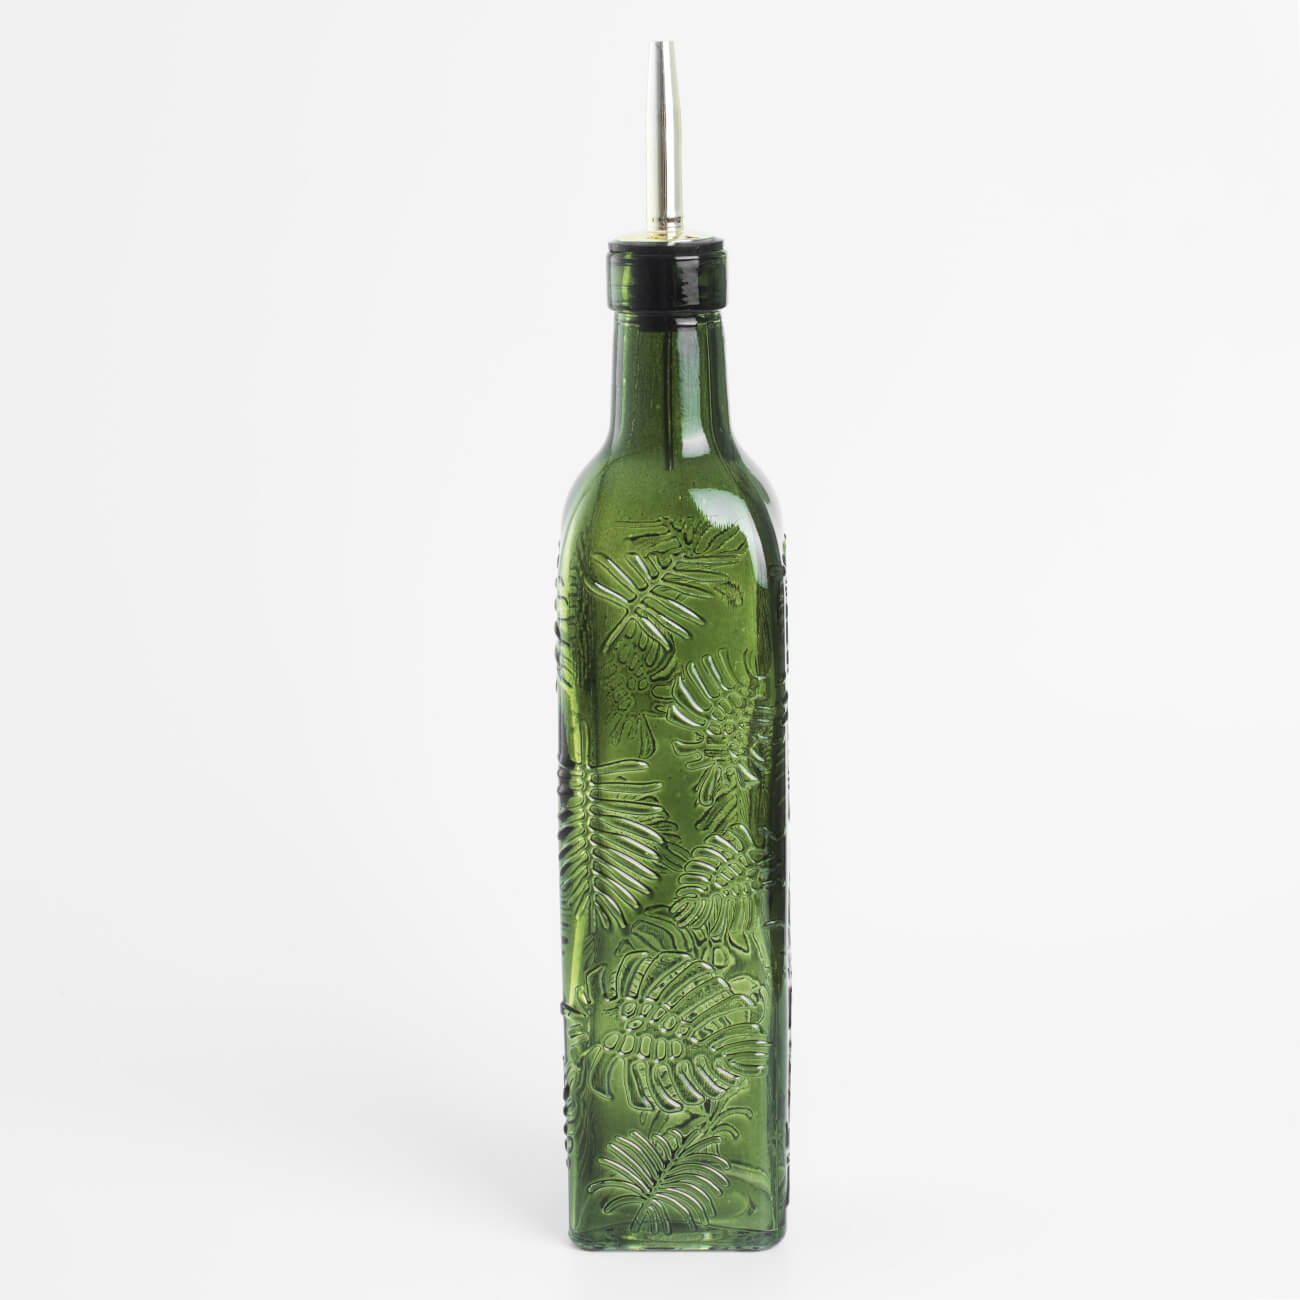 Бутылка для масла или уксуса, 500 мл, с дозатором, стекло Р/металл, зеленая, Монстера, Tropical leaves